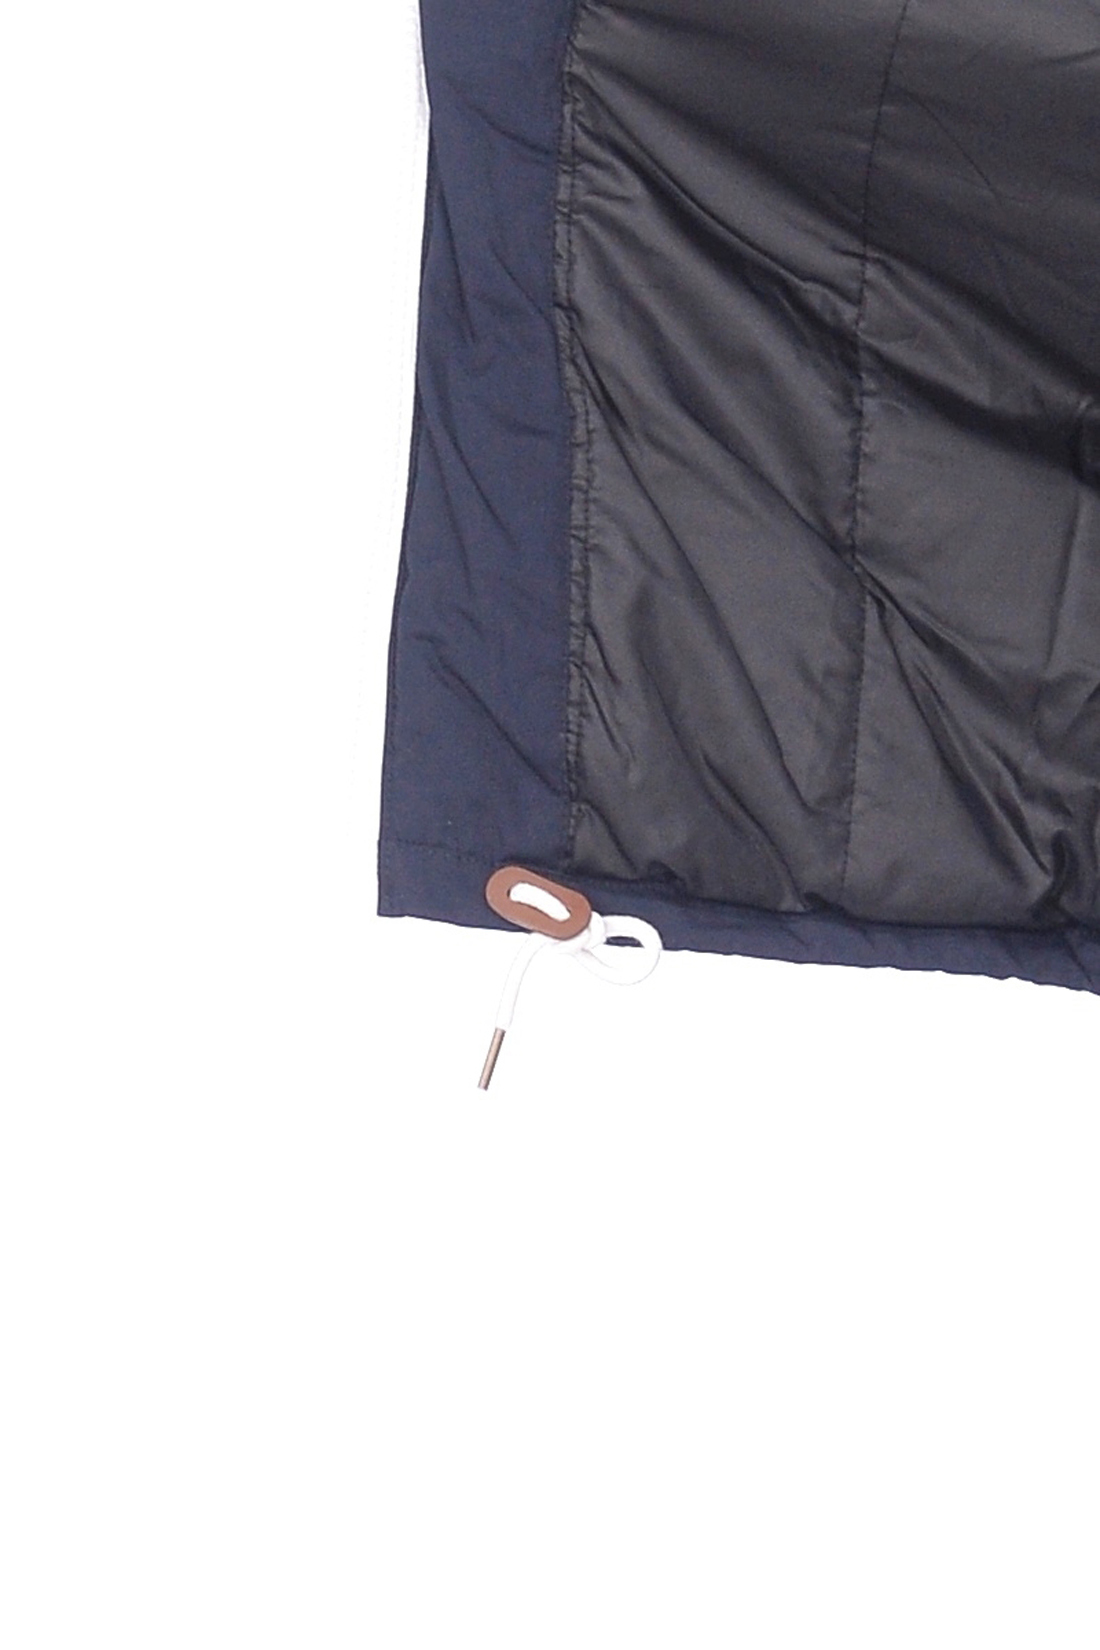 Куртка с белой отделкой (арт. baon B539025), размер XL, цвет синий Куртка с белой отделкой (арт. baon B539025) - фото 3